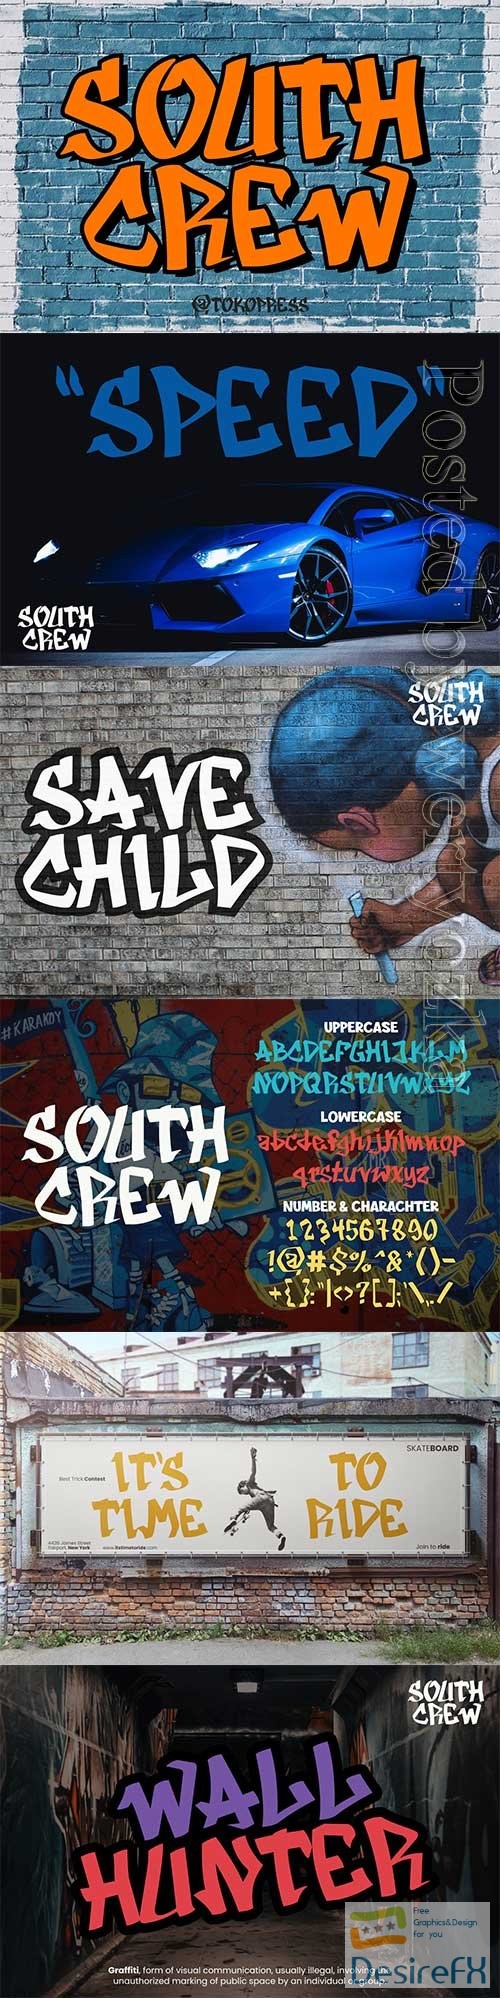 South Crew - graffiti font